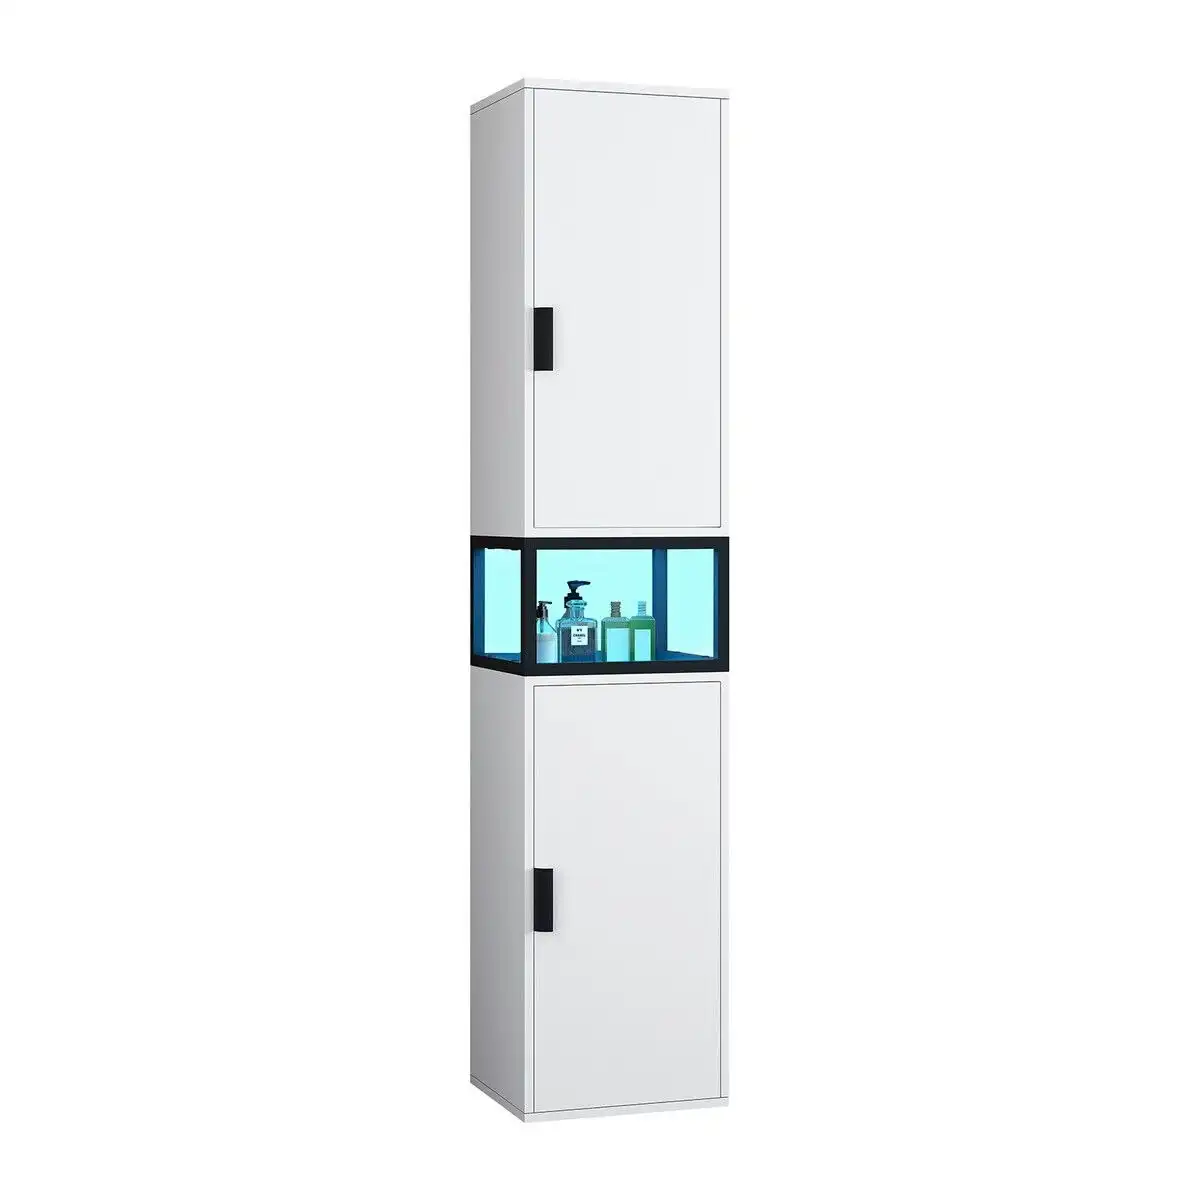 LUXSUITE Bathroom Storage Cabinet Shower Medicine Organiser Shelves Display Cupboard Tall Narrow Corner Floor Unit Tallboy Furniture LED Light 2 Doors White